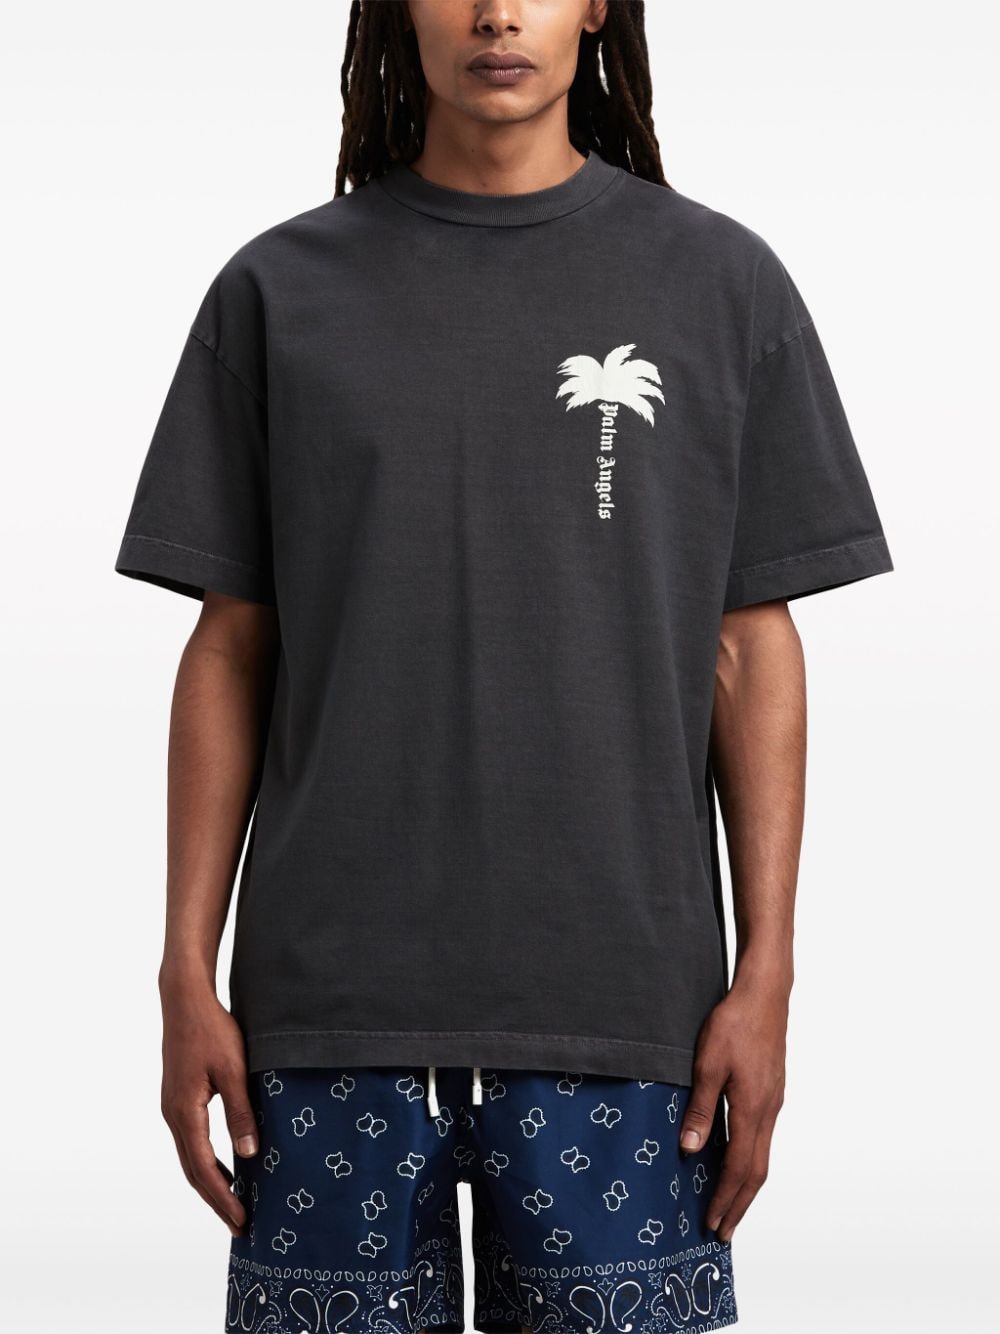 Palm motif T-shirt